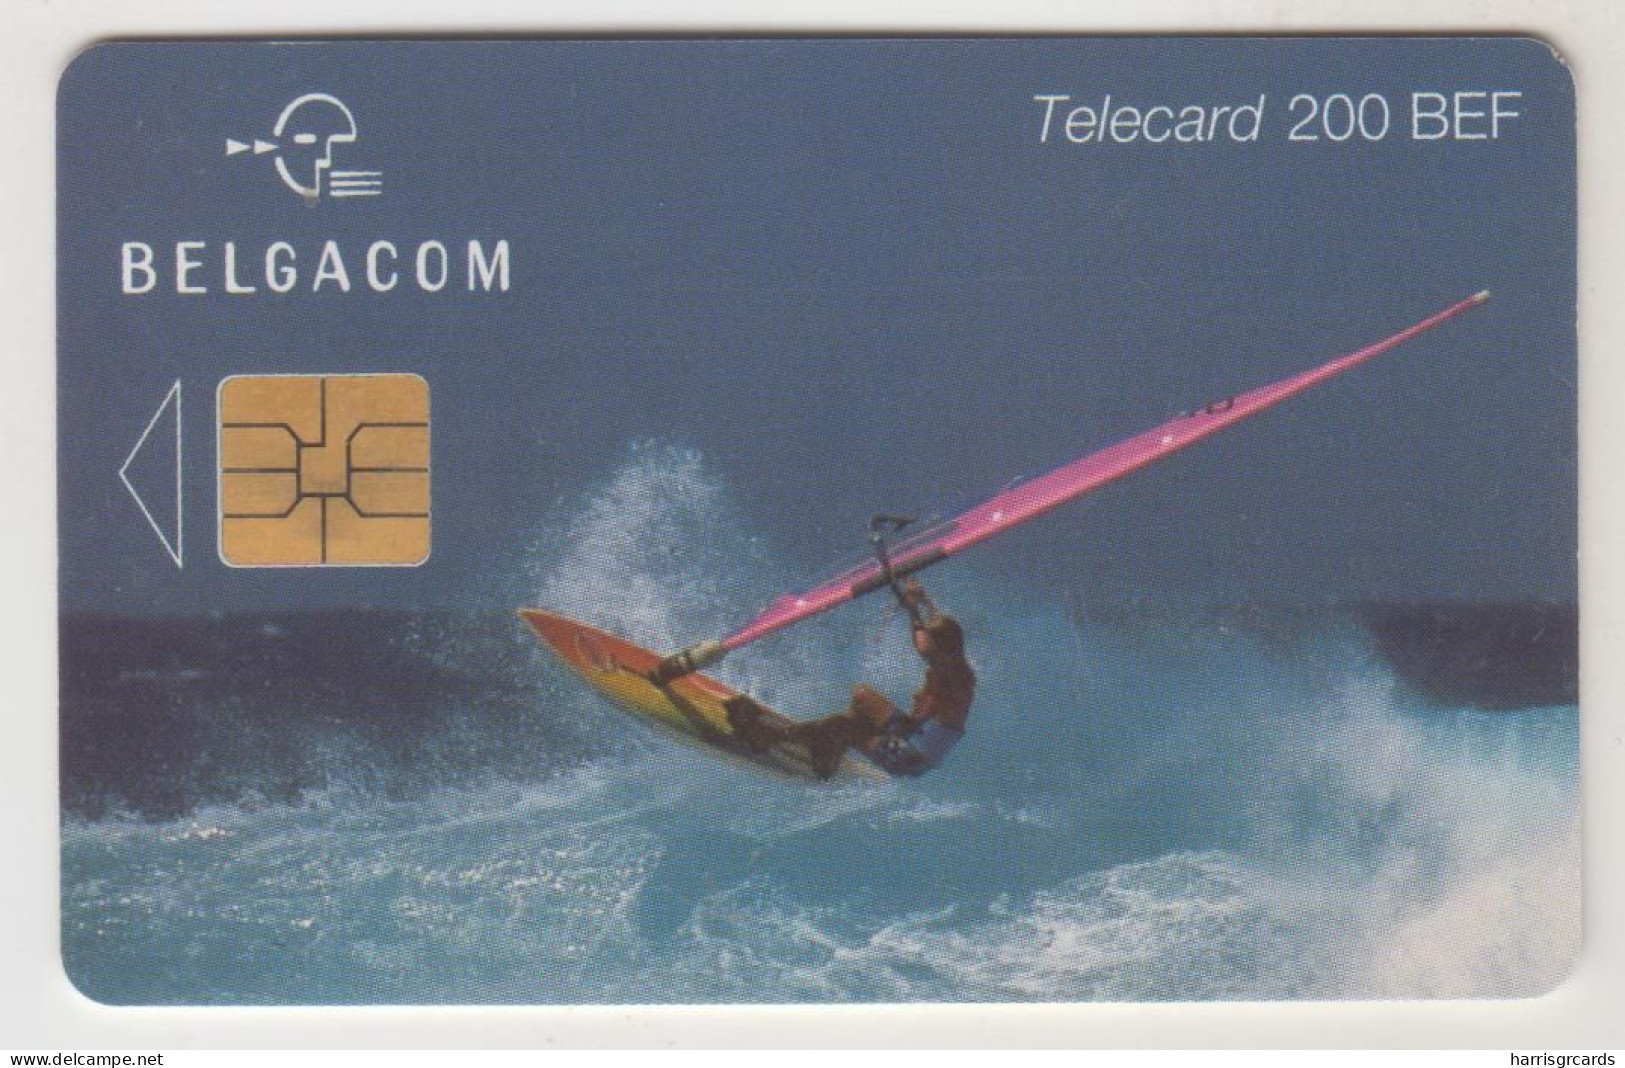 BELGIUM - Surfer, 200 BEF, Tirage 150.000, Used - Avec Puce